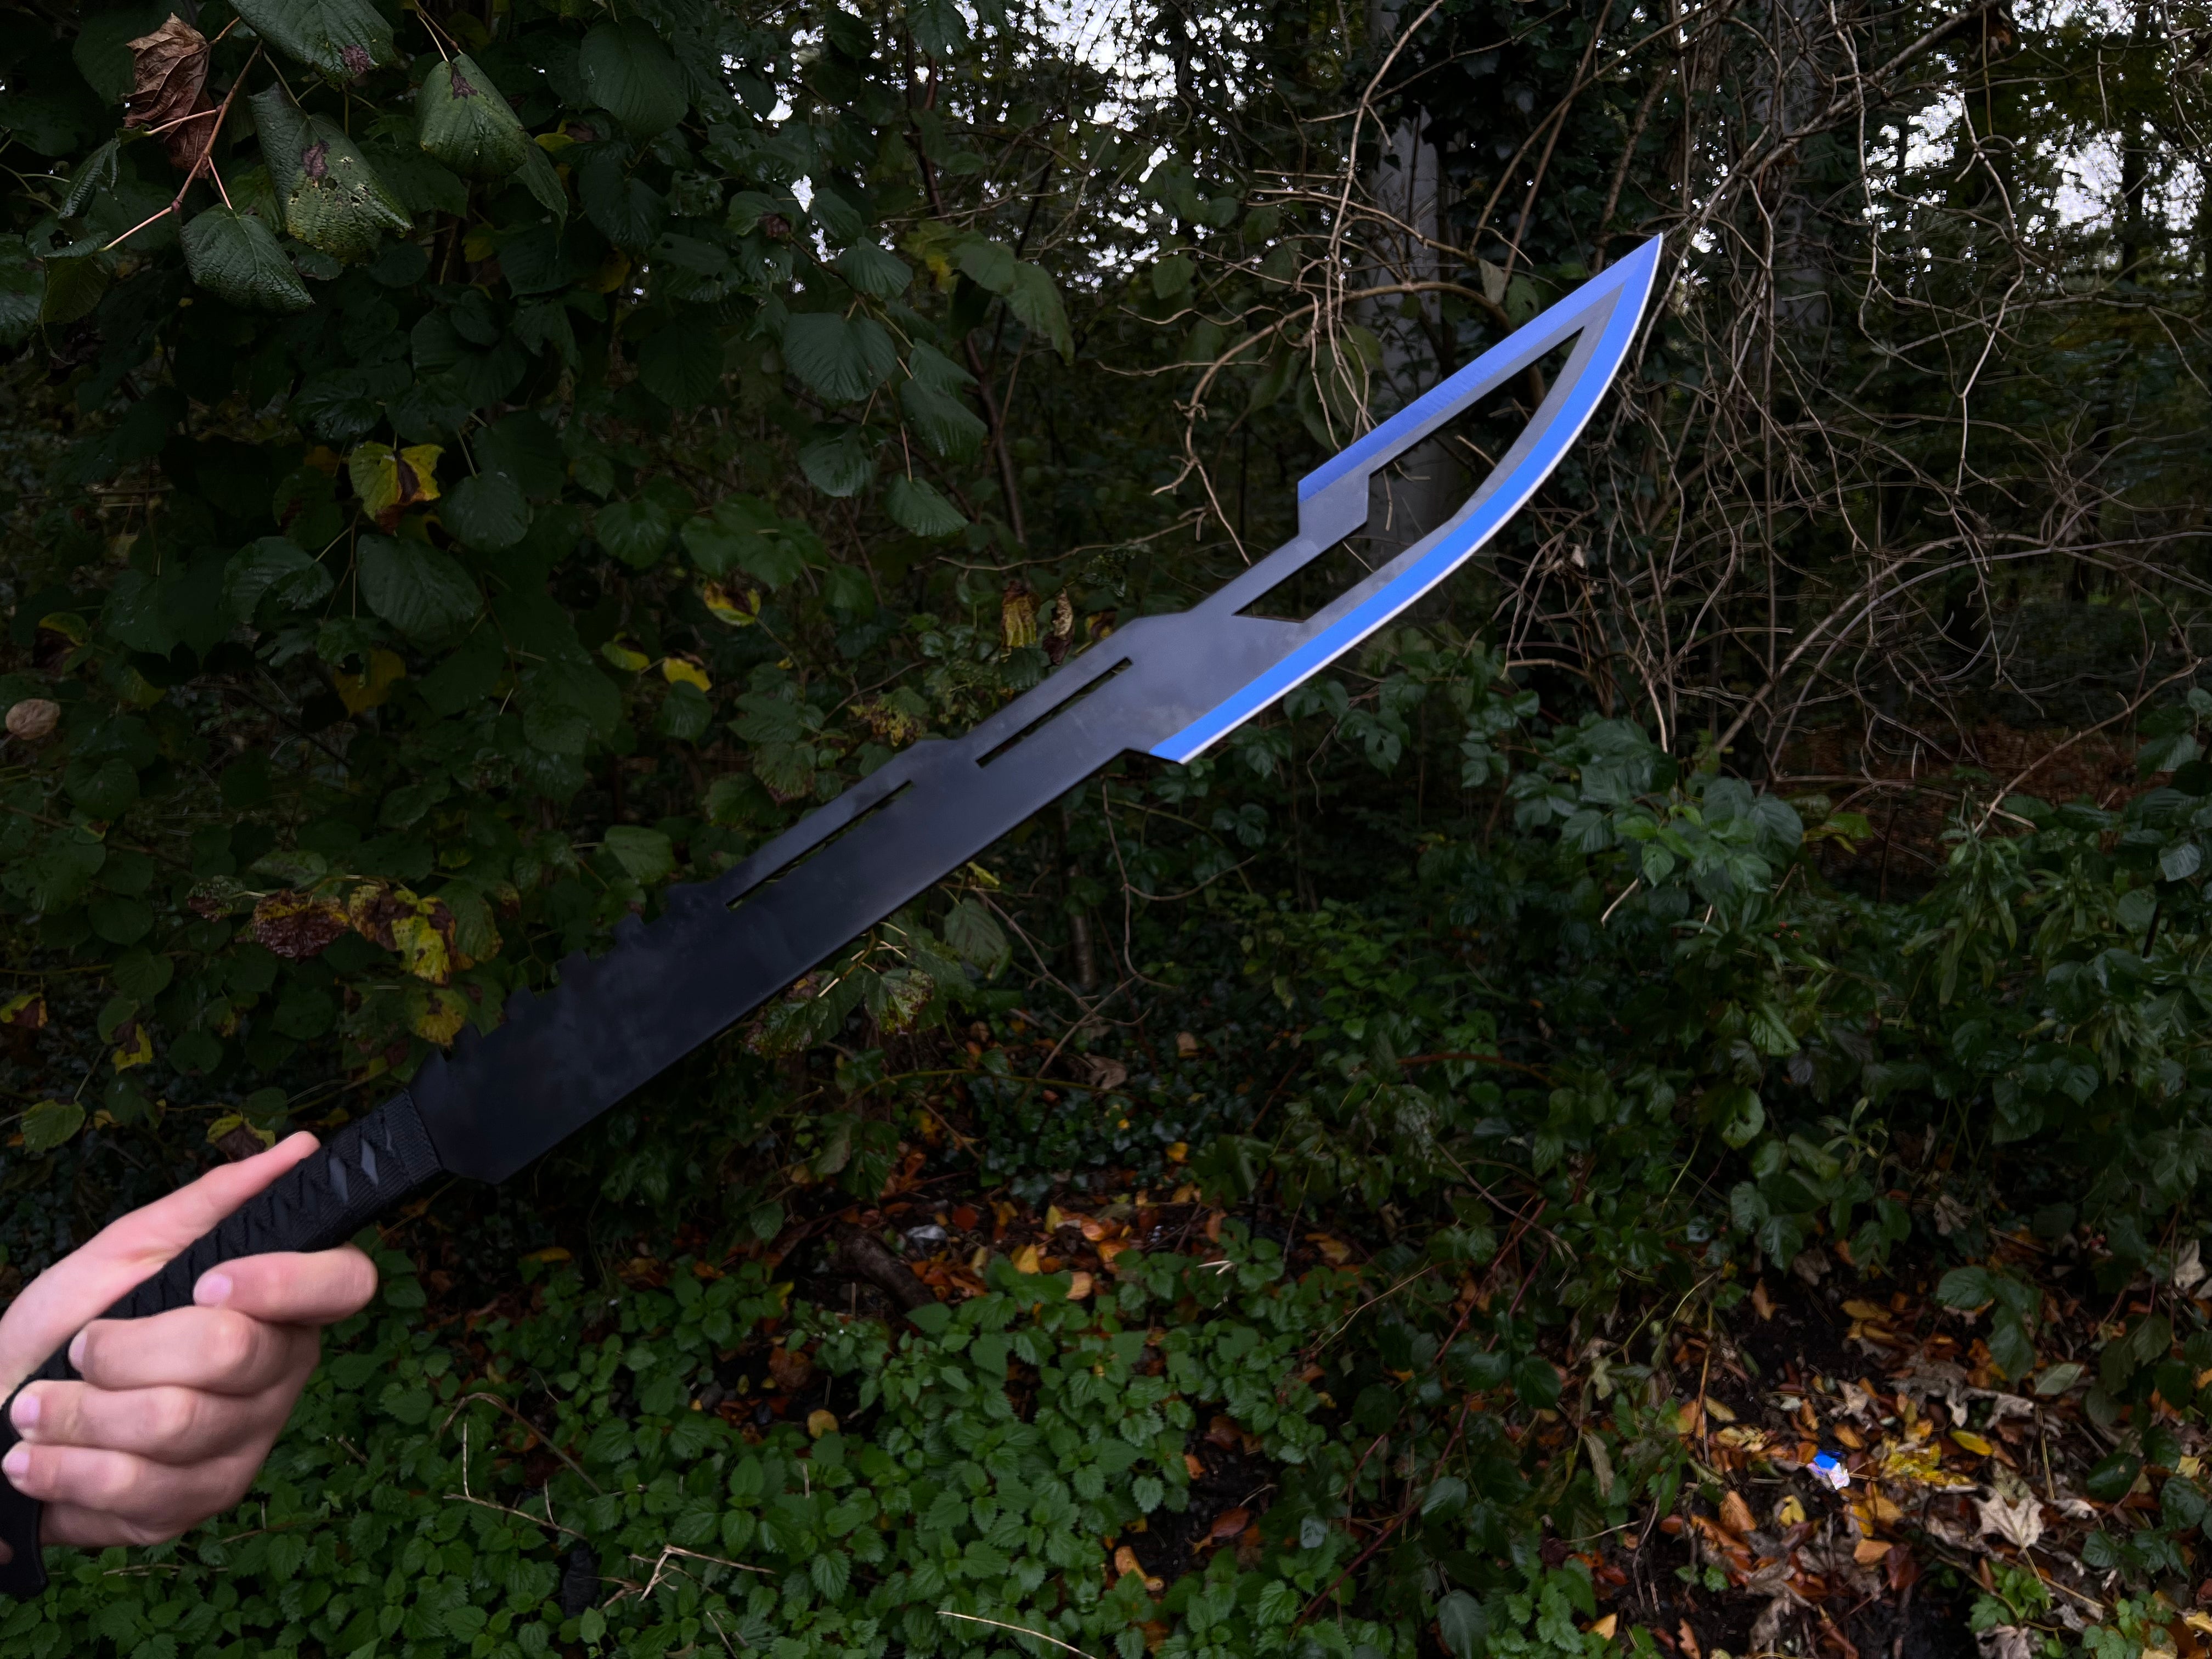 Combat sword "Azure Blade"-Traditional back sword with blue-black coating and back strap